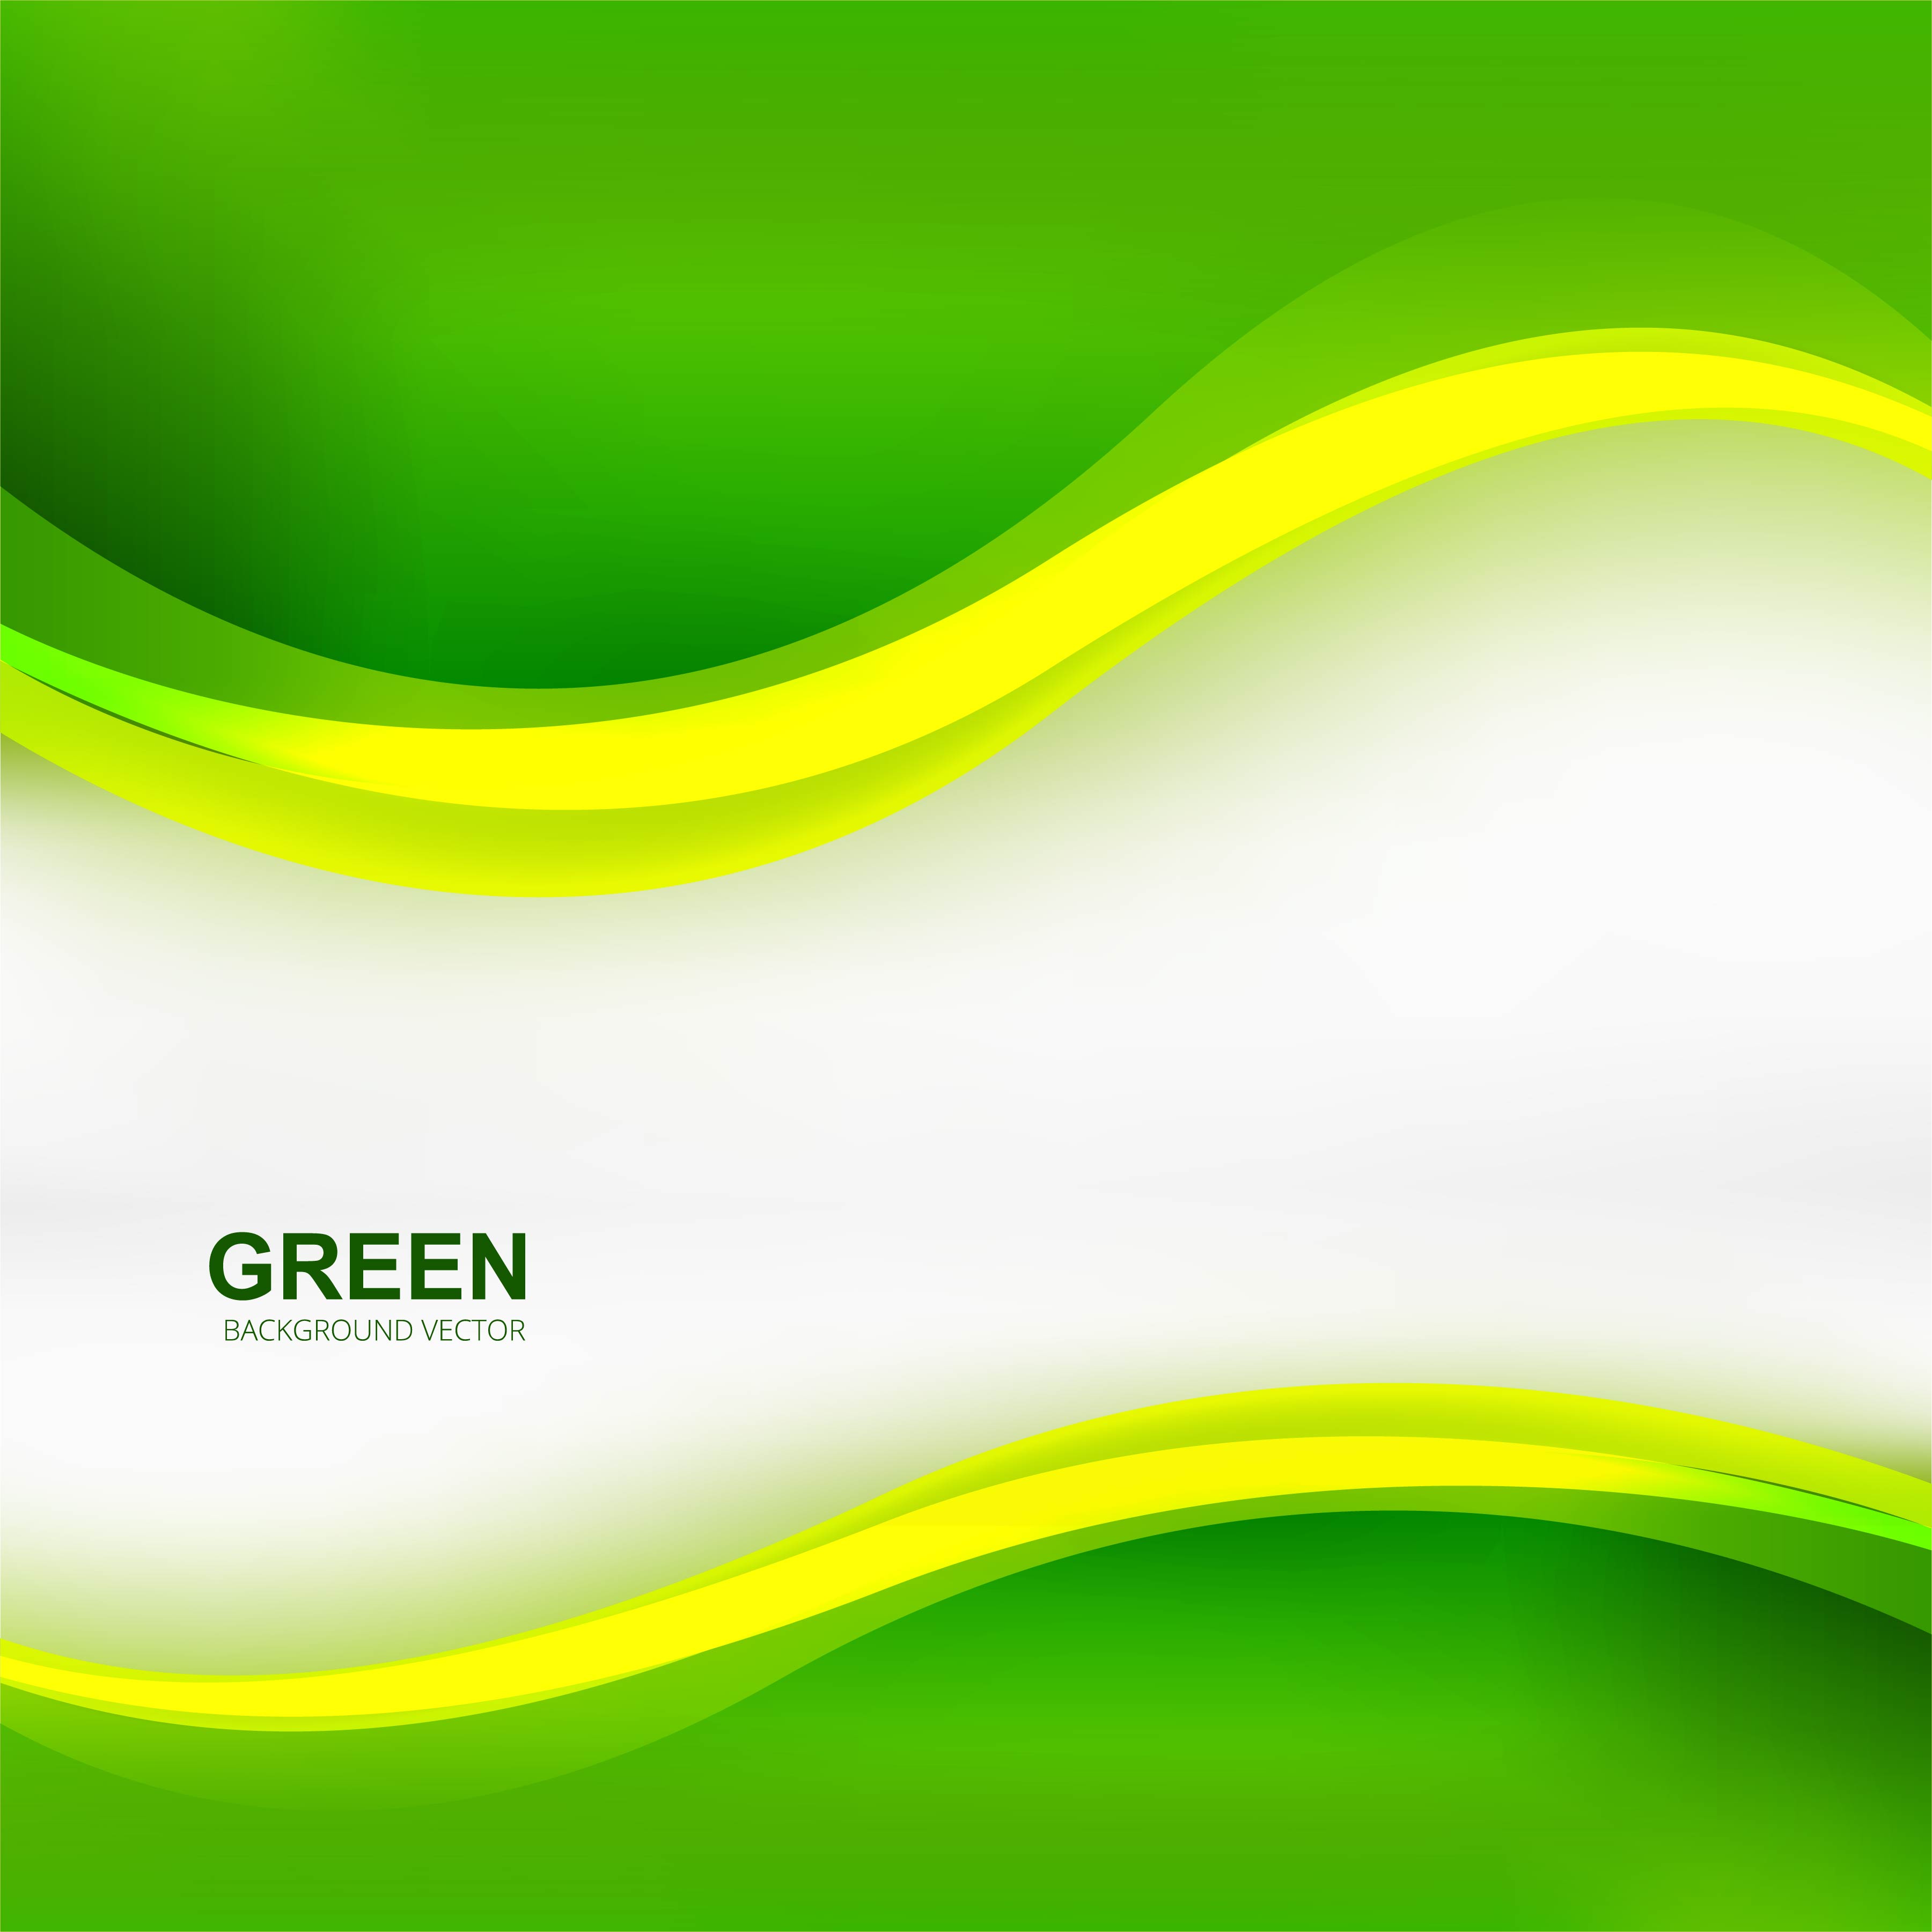 Elegant stylish green wave background 241416 - Download